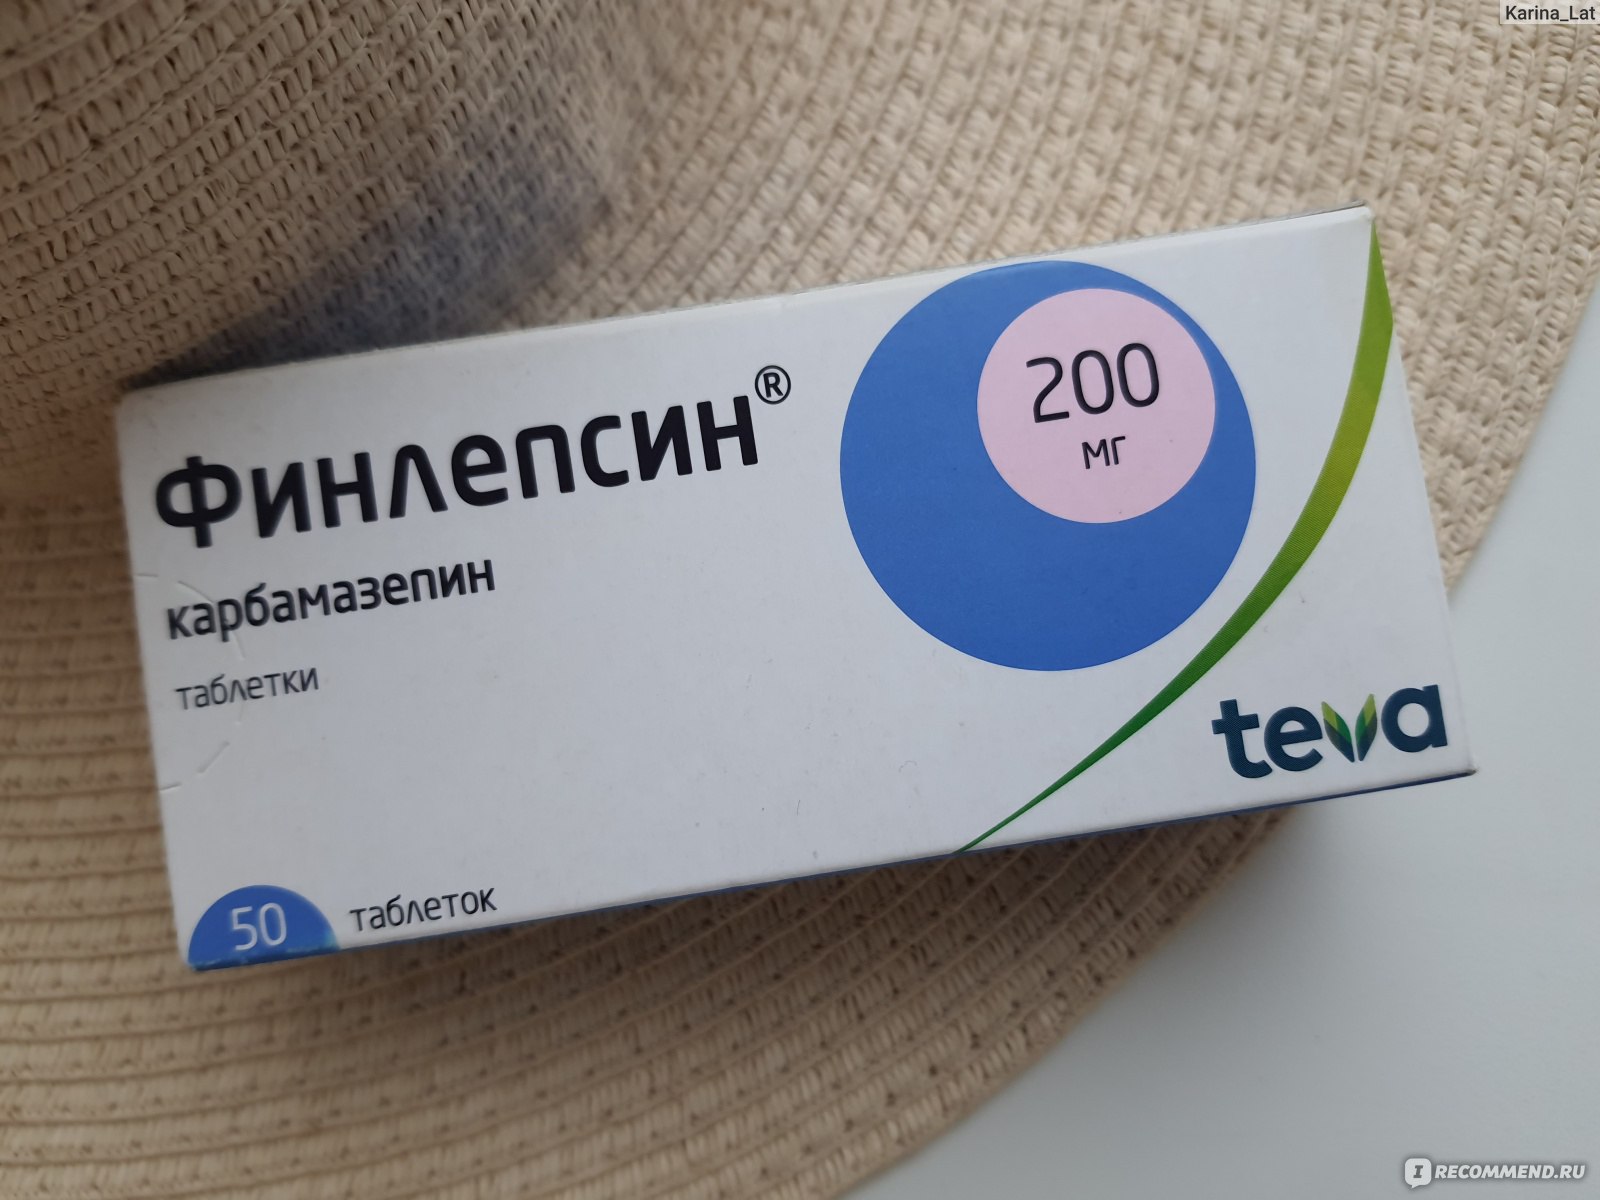 Таблетки Финлепсин (карбамазепин 200 мг) - «Помог при невралгии .